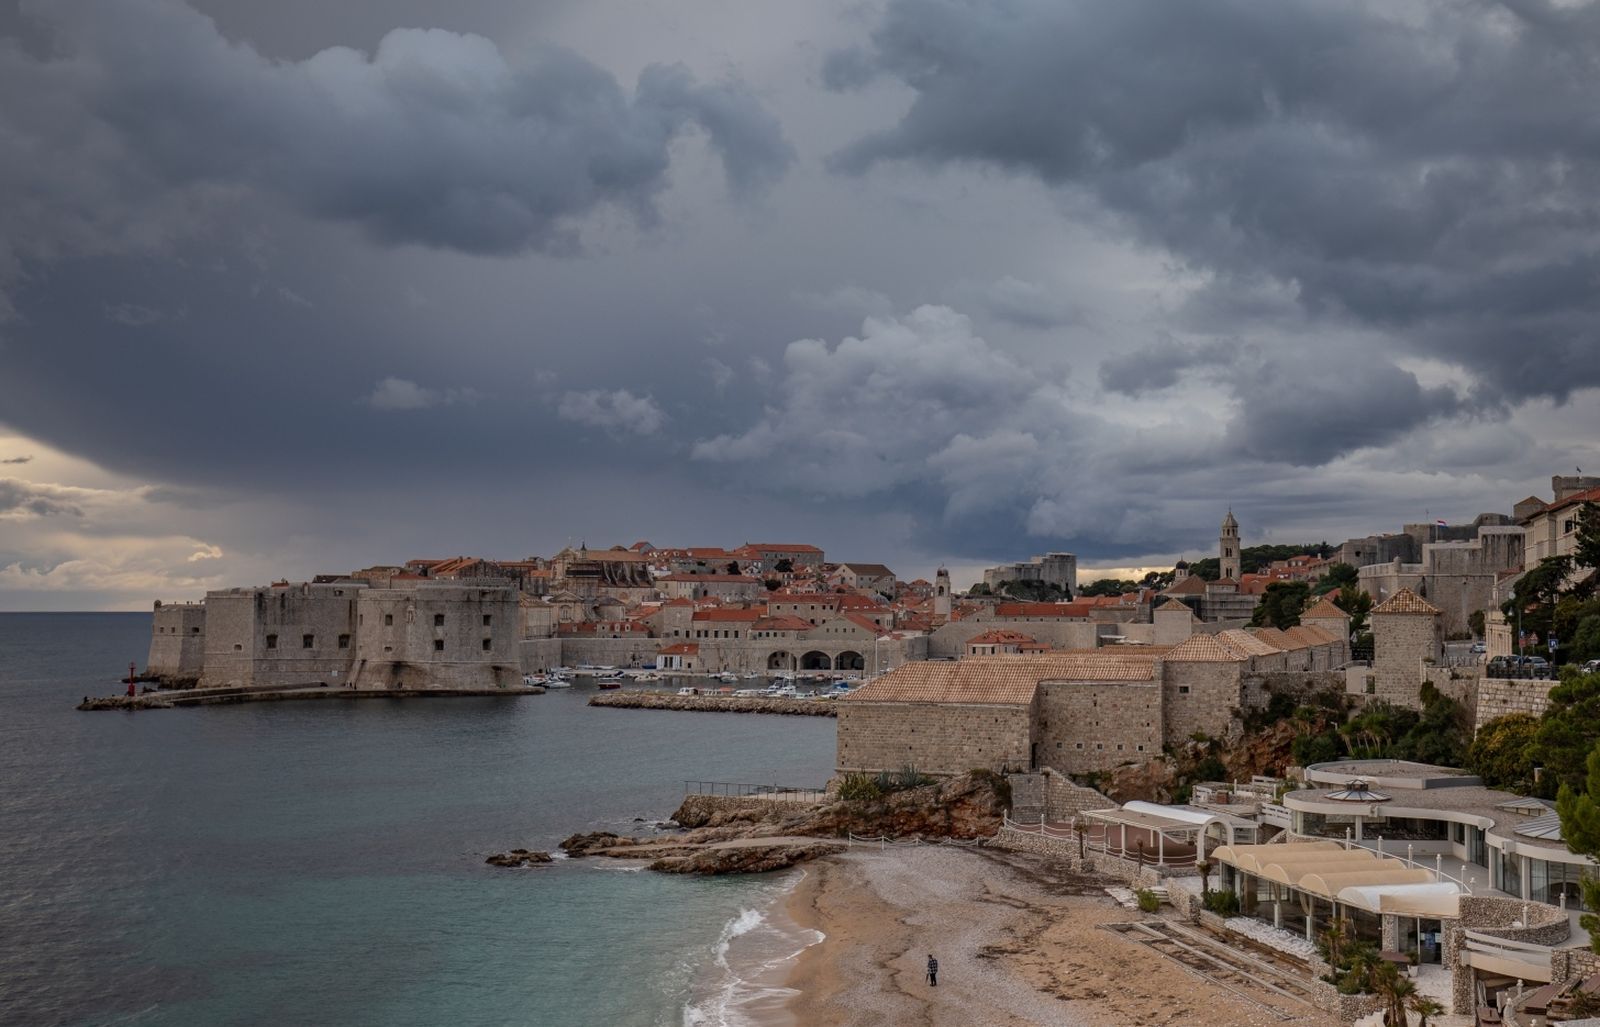 12.12.2020., Ploce, Dubrovnik - Kisni oblaci nad Dubrovnikom.
Photo: Grgo Jelavic/PIXSELL